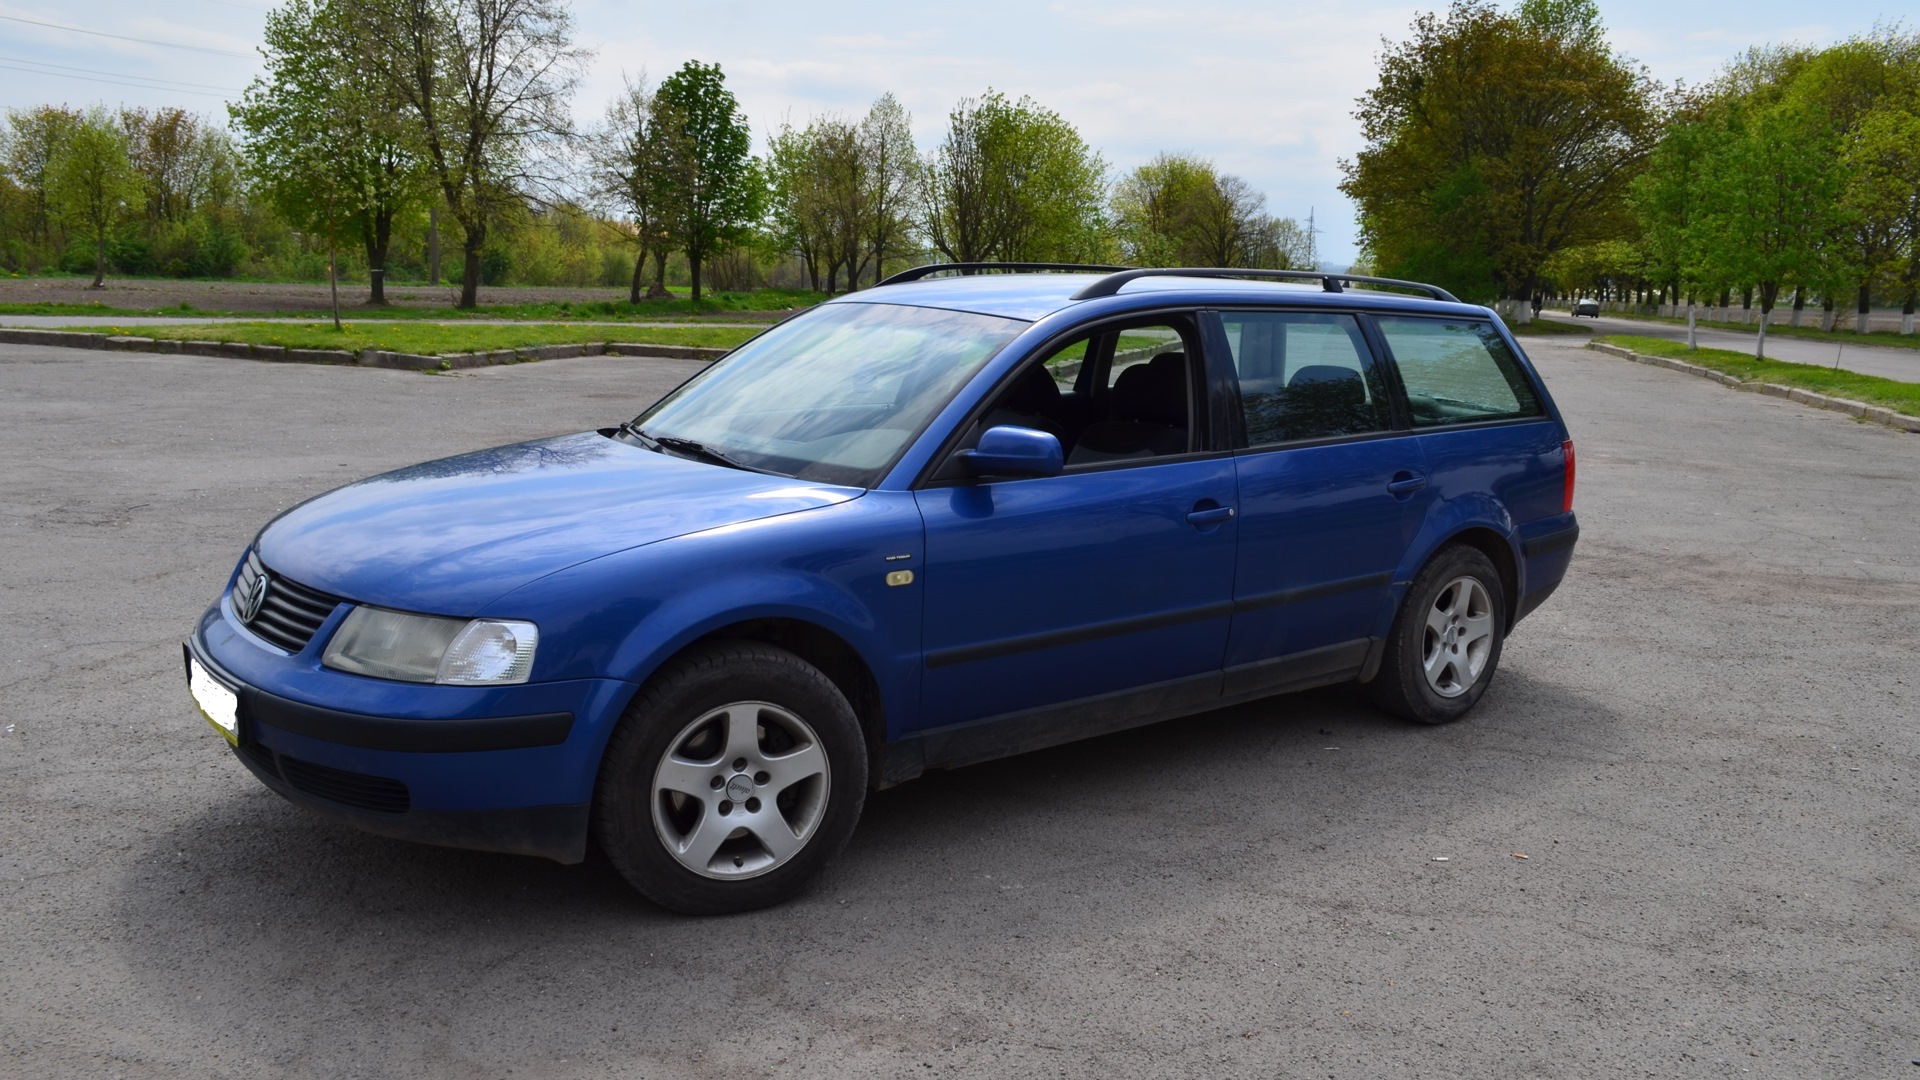 Куплю б у пассат б5. Volkswagen Passat b5 1999 универсал. Пассат б5 универсал синий. Пассат б5 универсал 2001г. VW Passat b5 универсал синий.